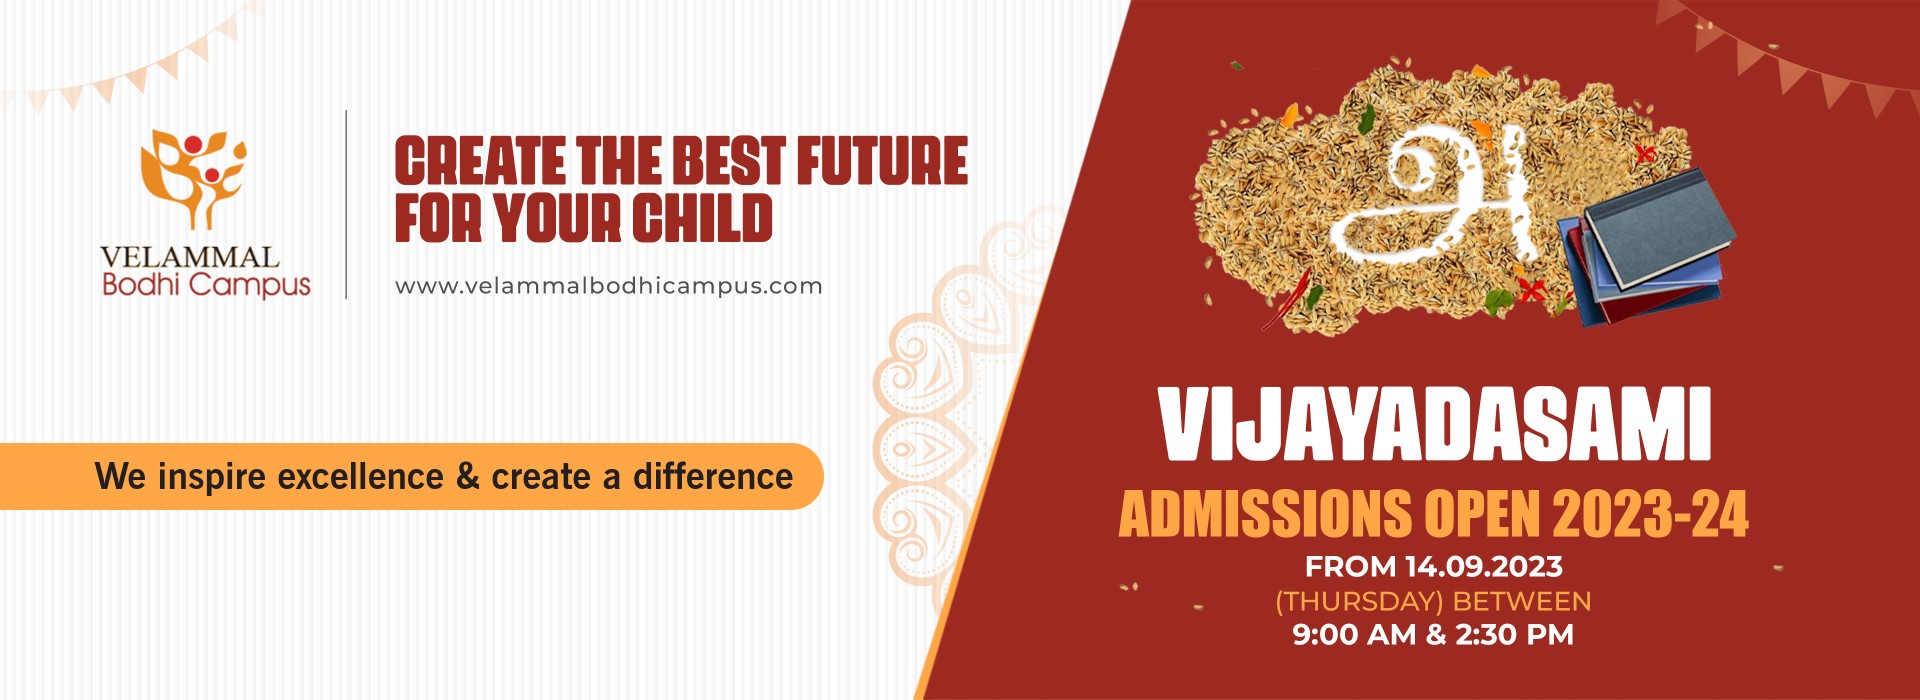 Vijayadasami Admission 2023-24